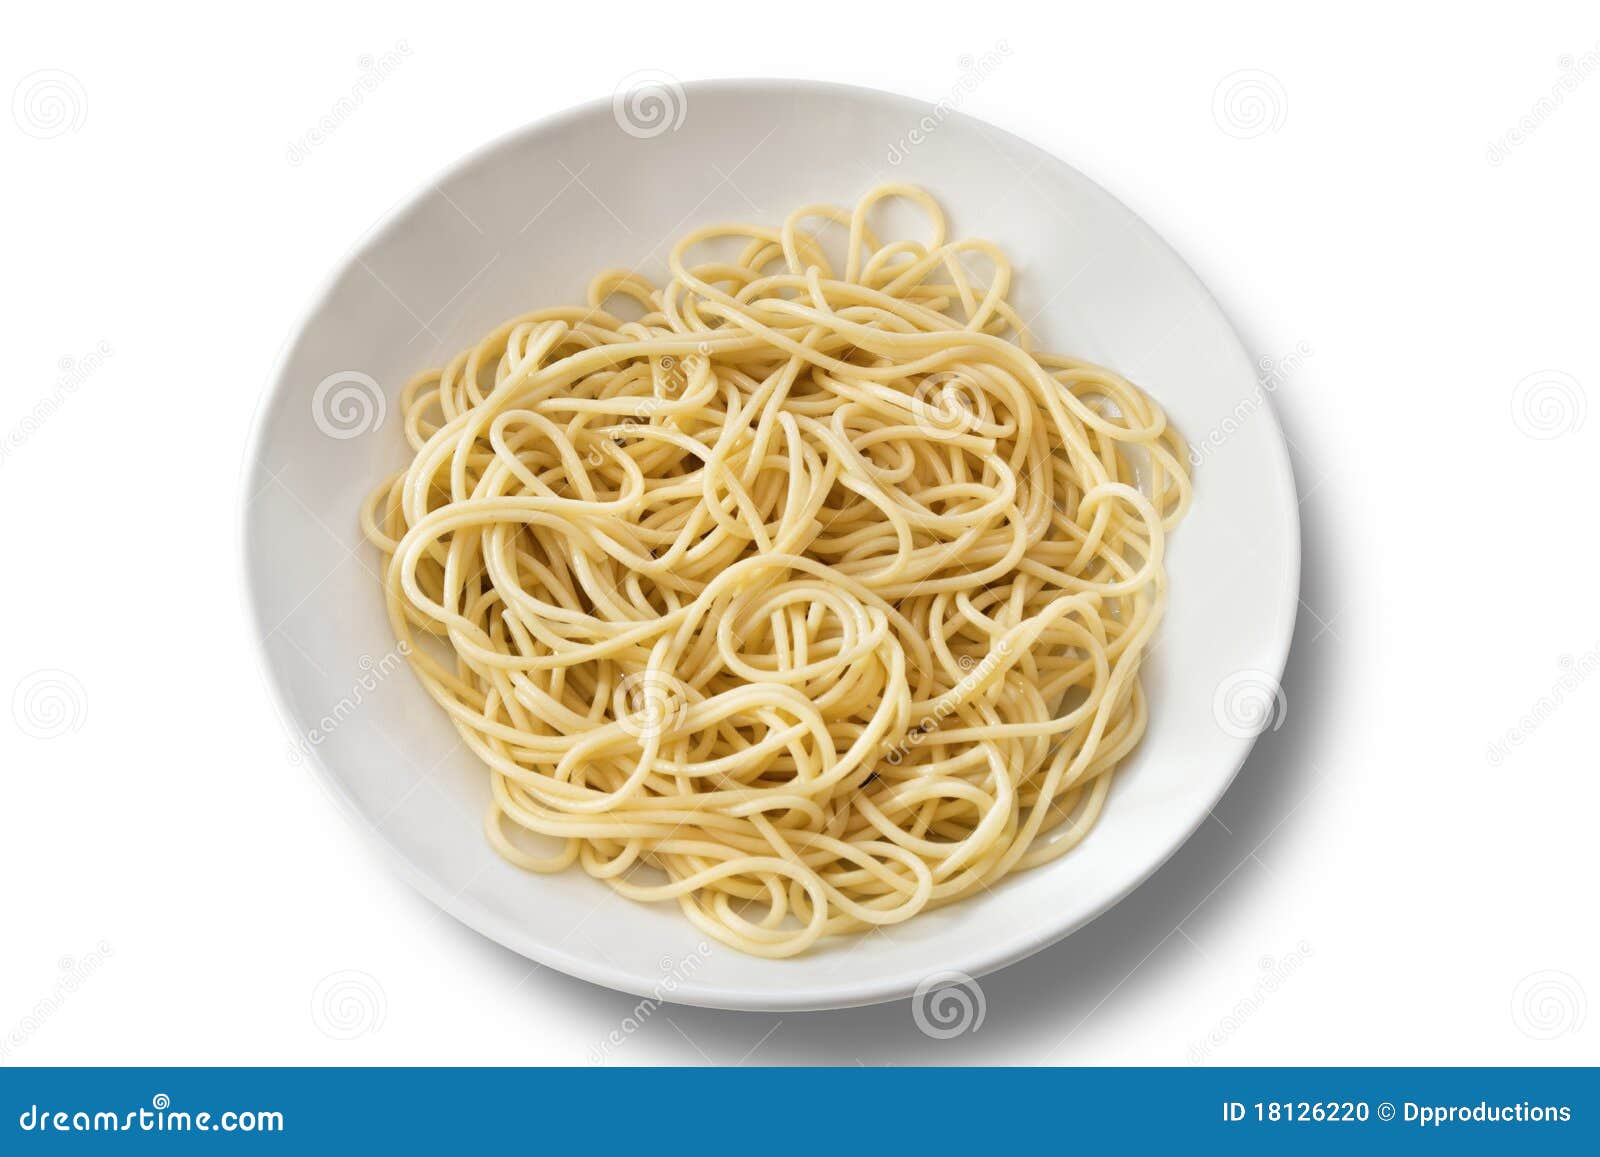 plate-spaghetti-isolated-18126220.jpg